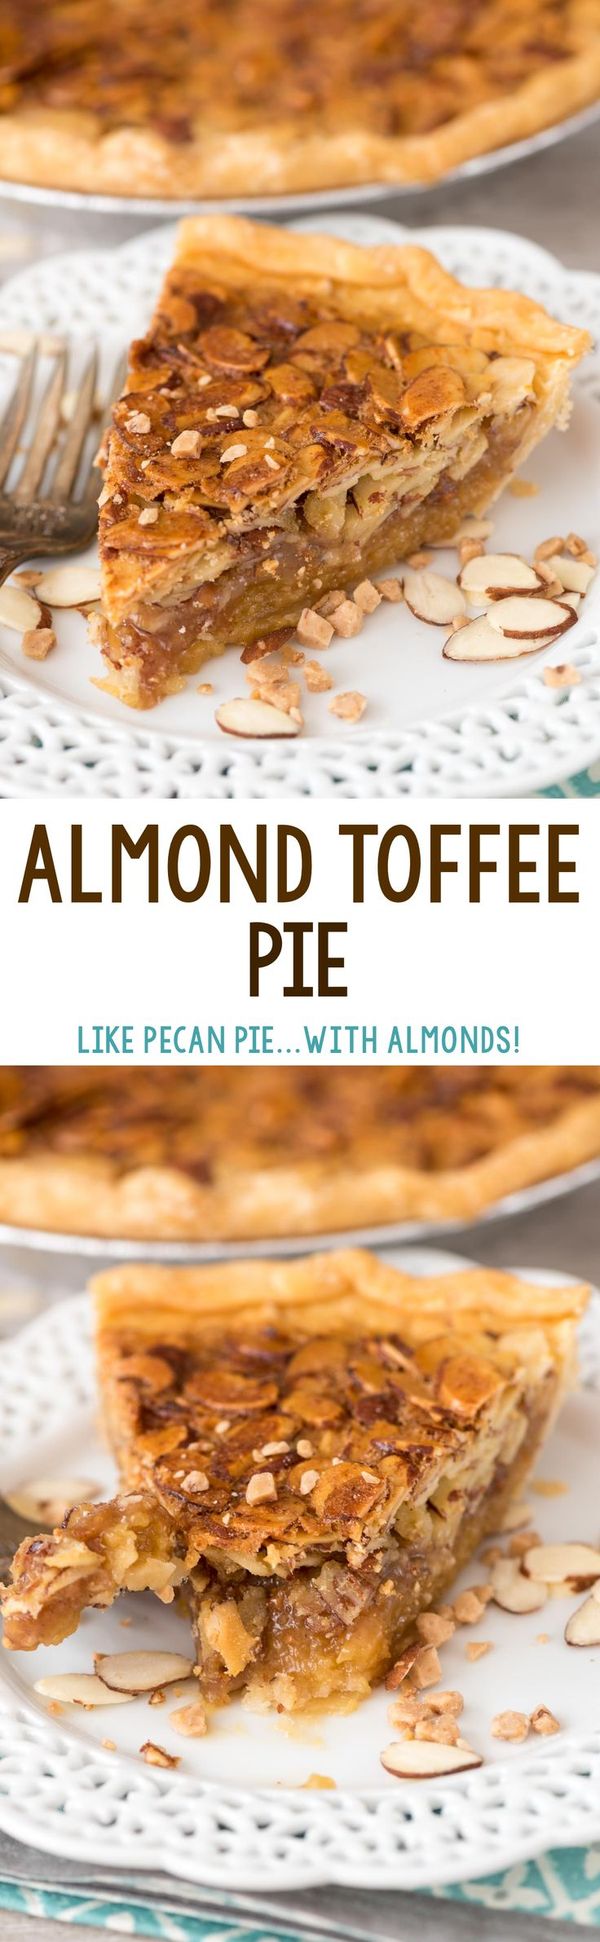 Toffee Almond Pie